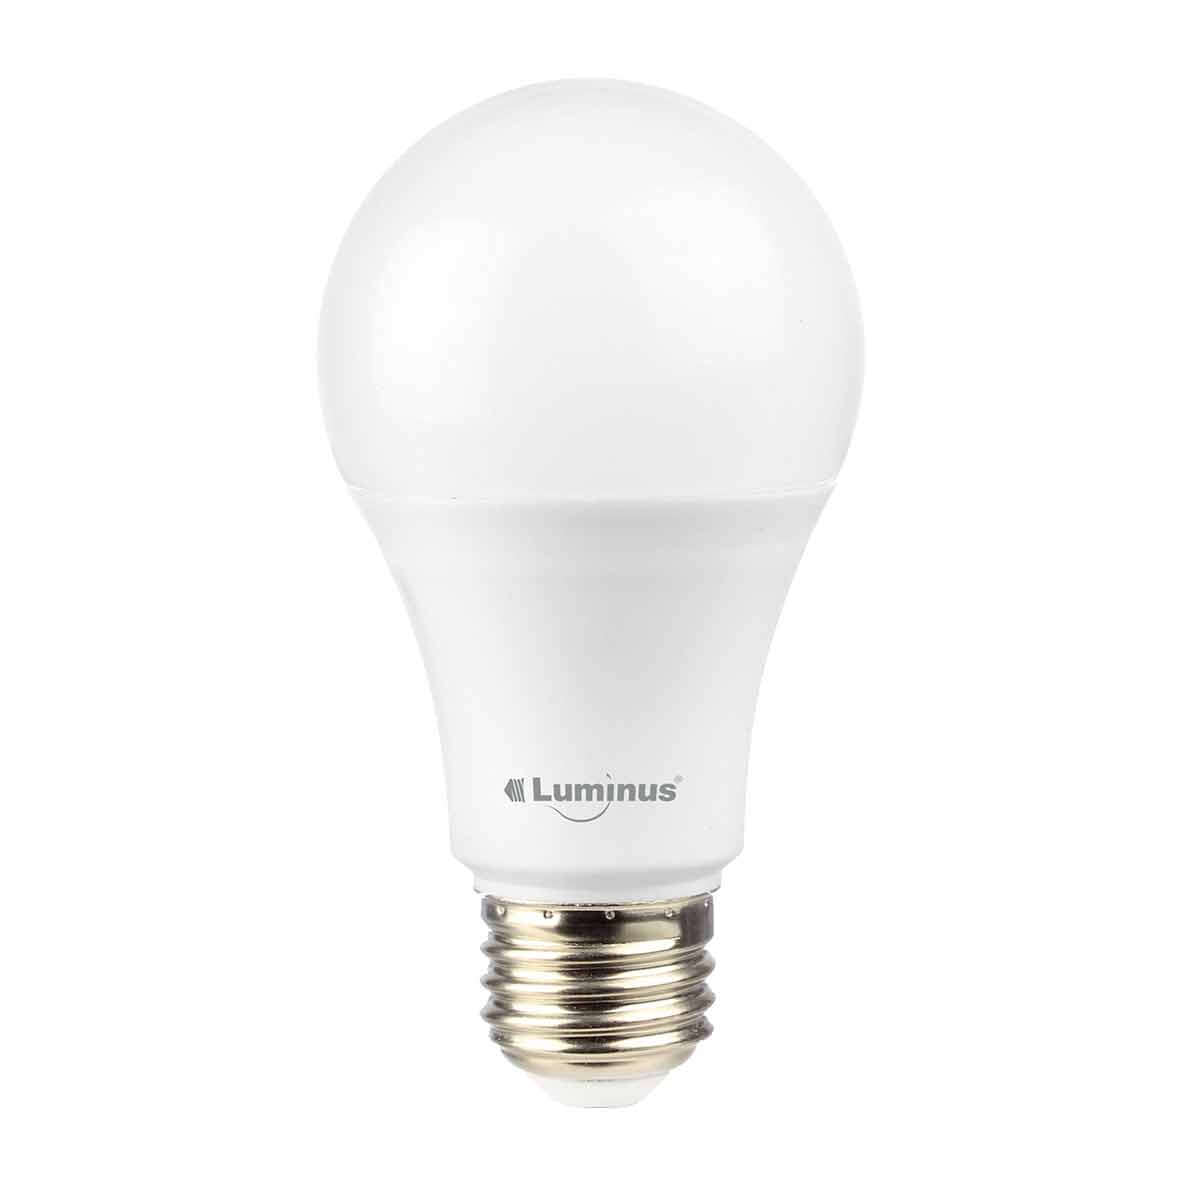 Luminus LED Light Bulbs - 2 Pack